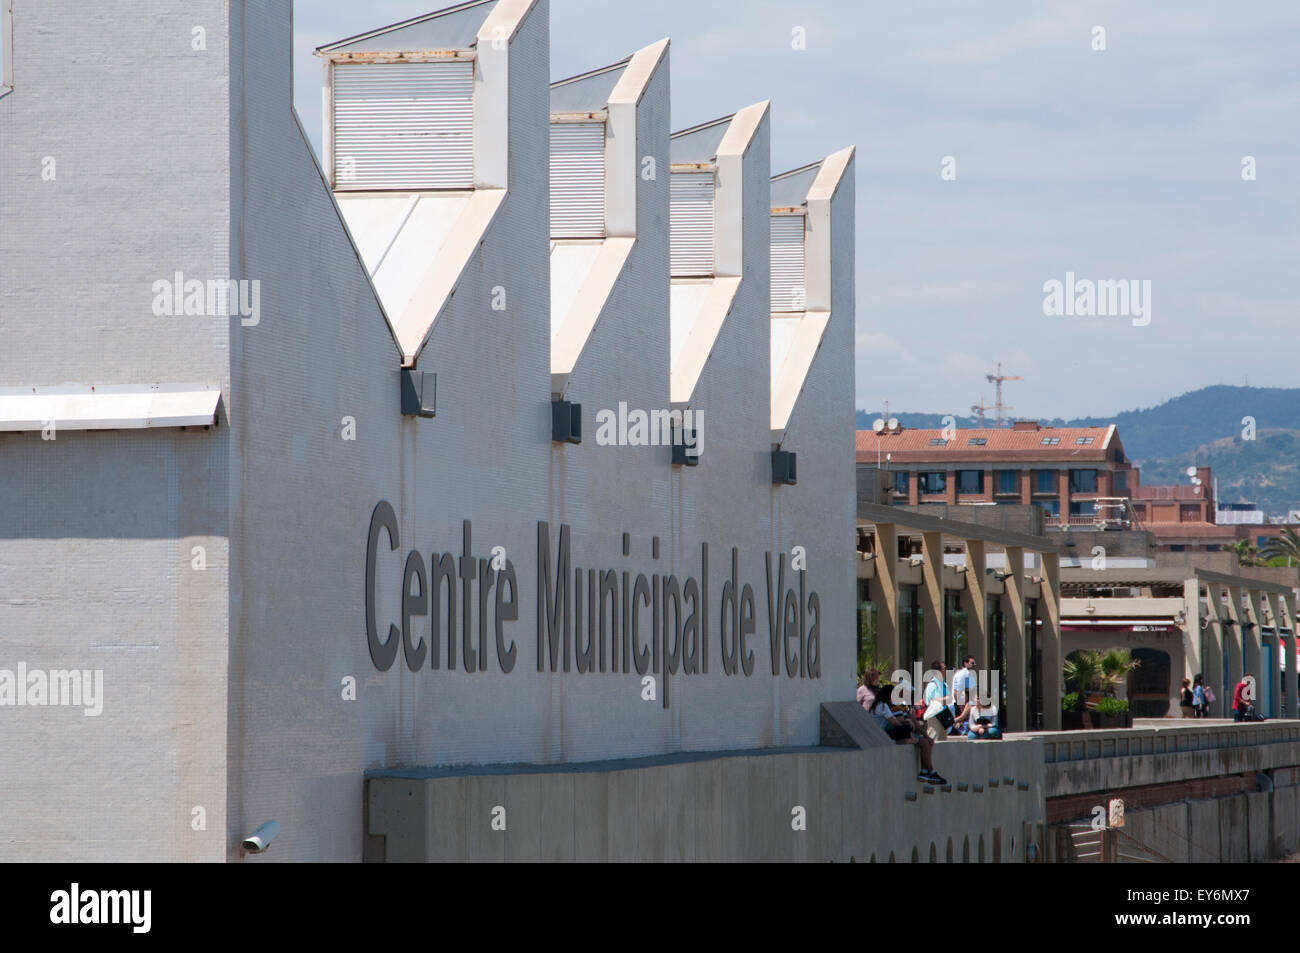 Centro Municipal de vela, Port Olímpic, Barcelona Fotografía de stock -  Alamy